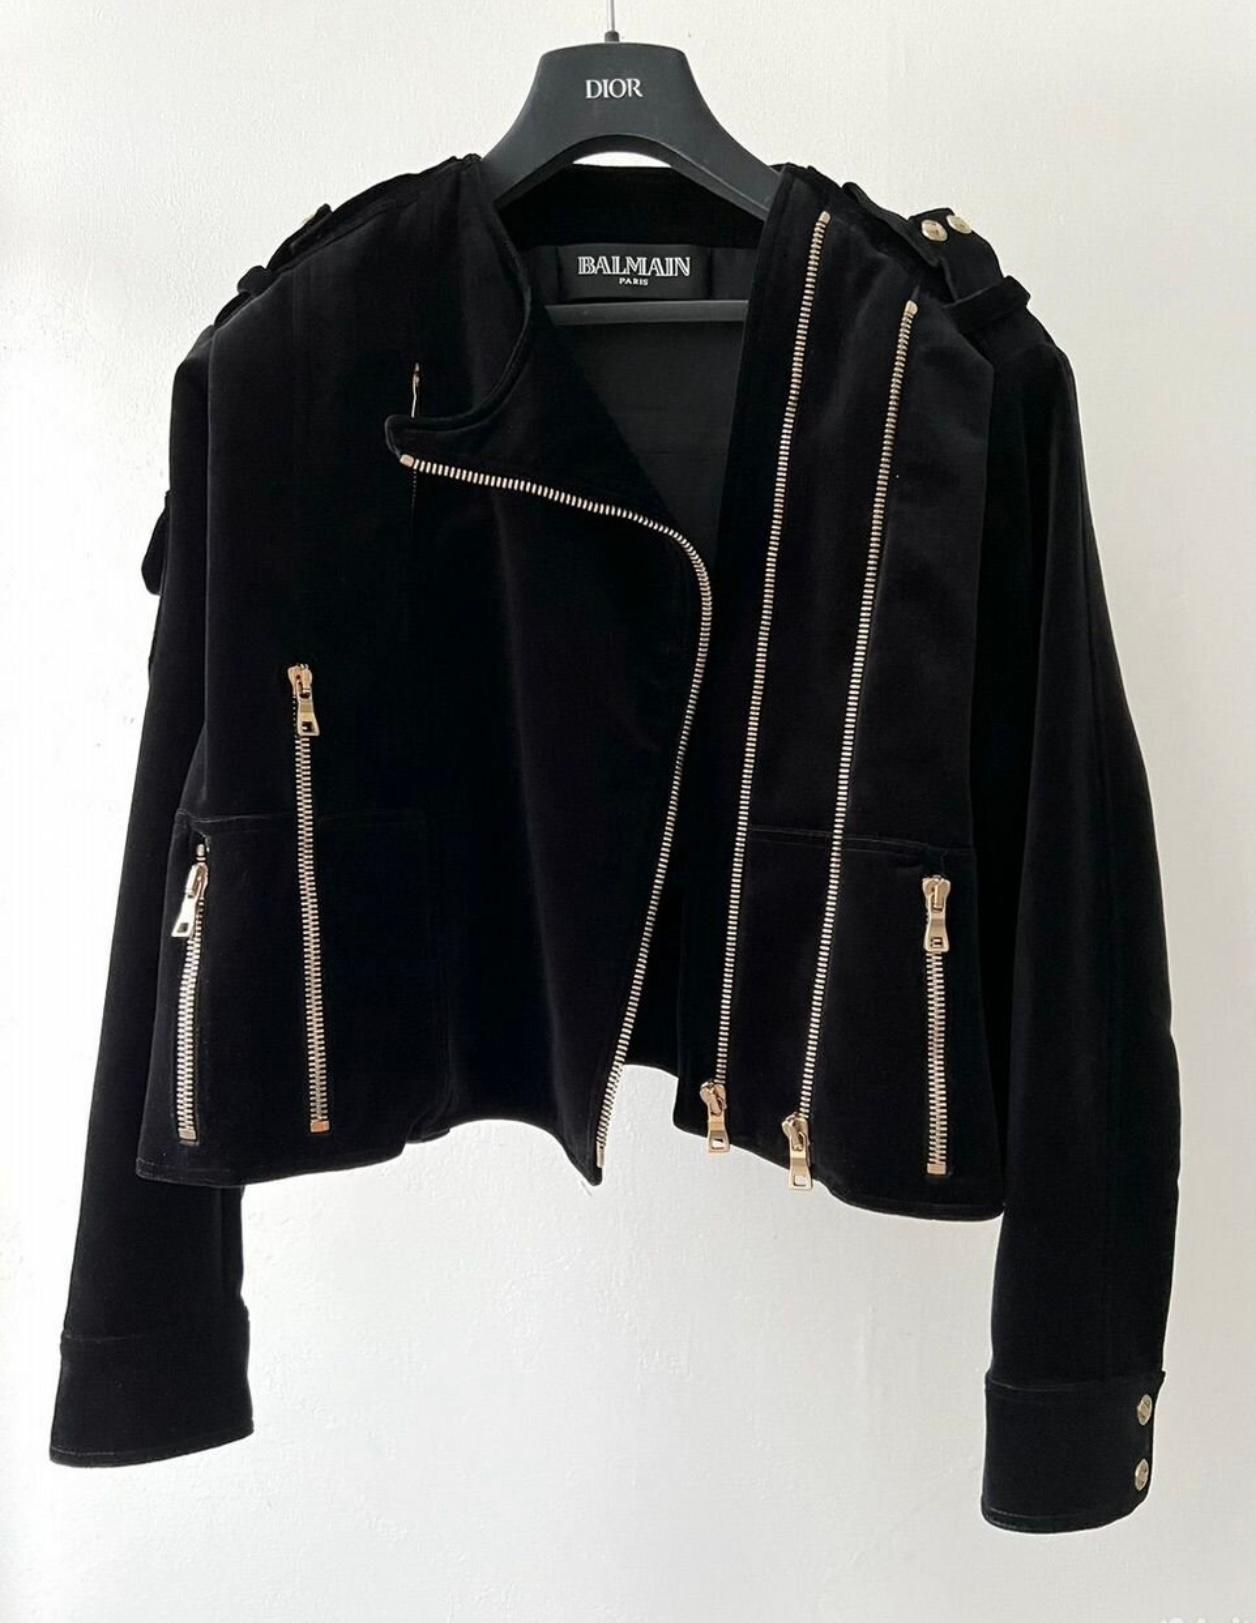 Stunning Balmain black velvet biker jacket.
Size mark 36 FR, condition of a new thing.